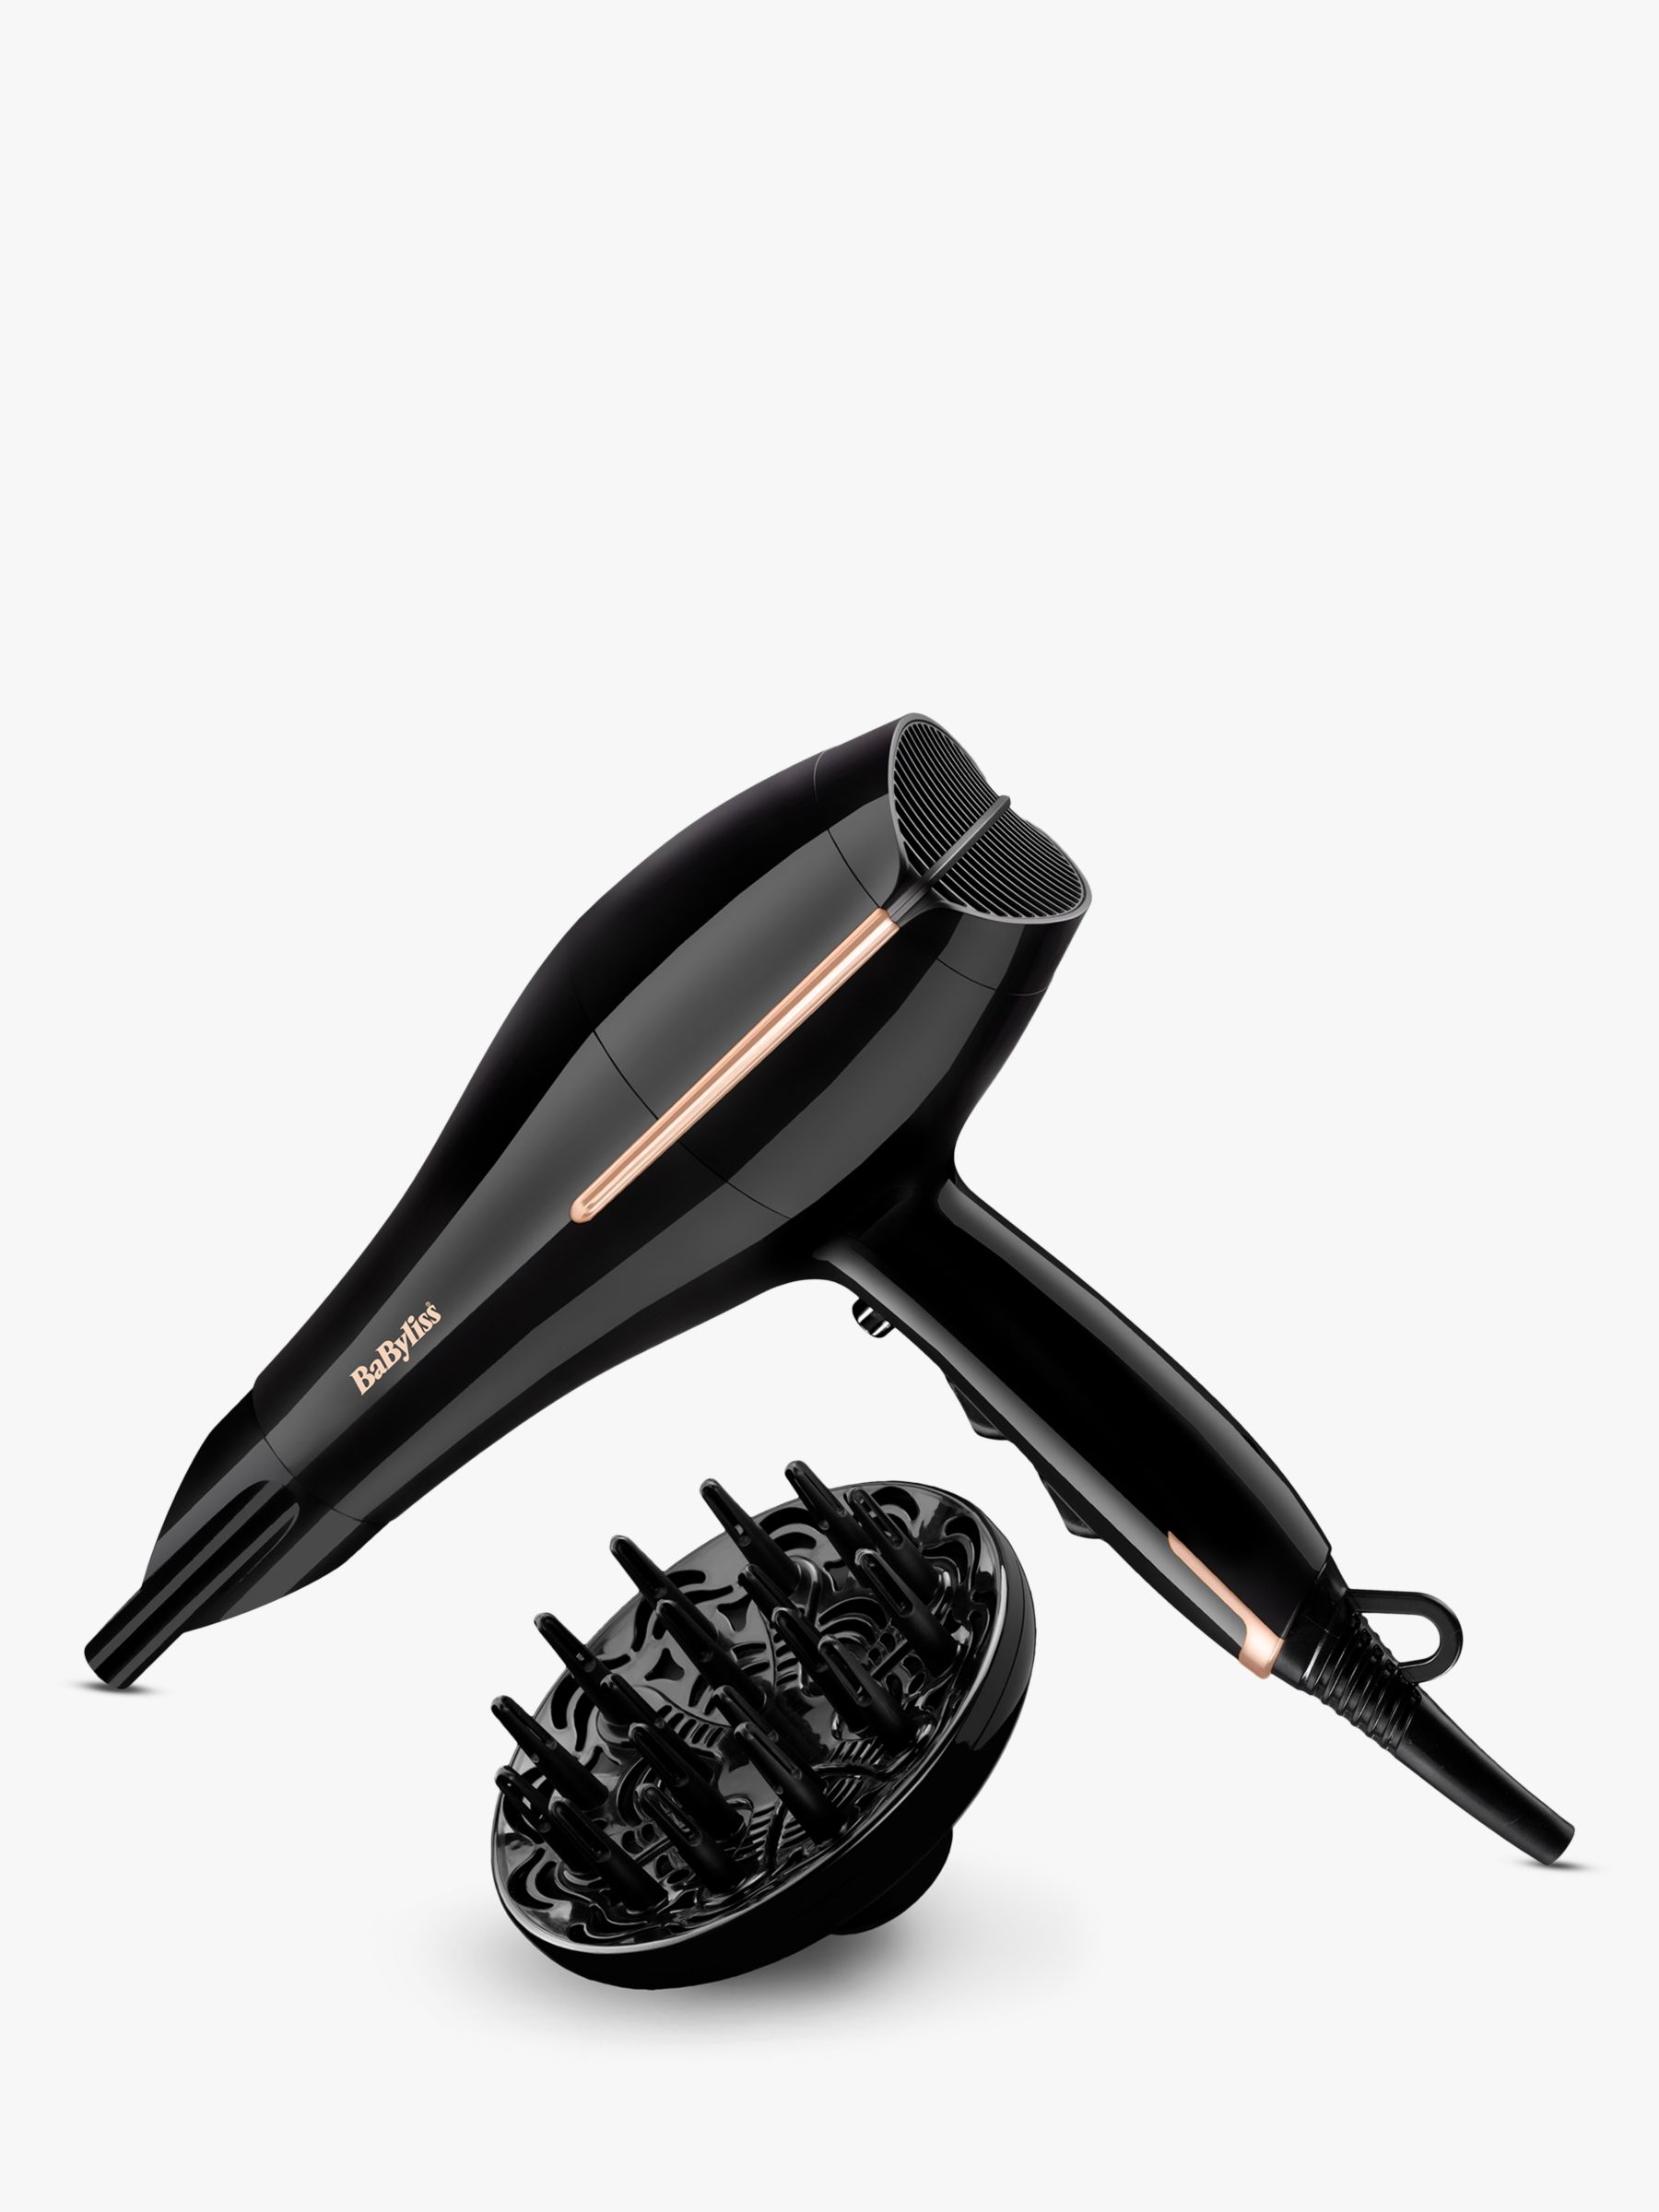 BaByliss Salon Pro 2200 Hair Dryer, Black